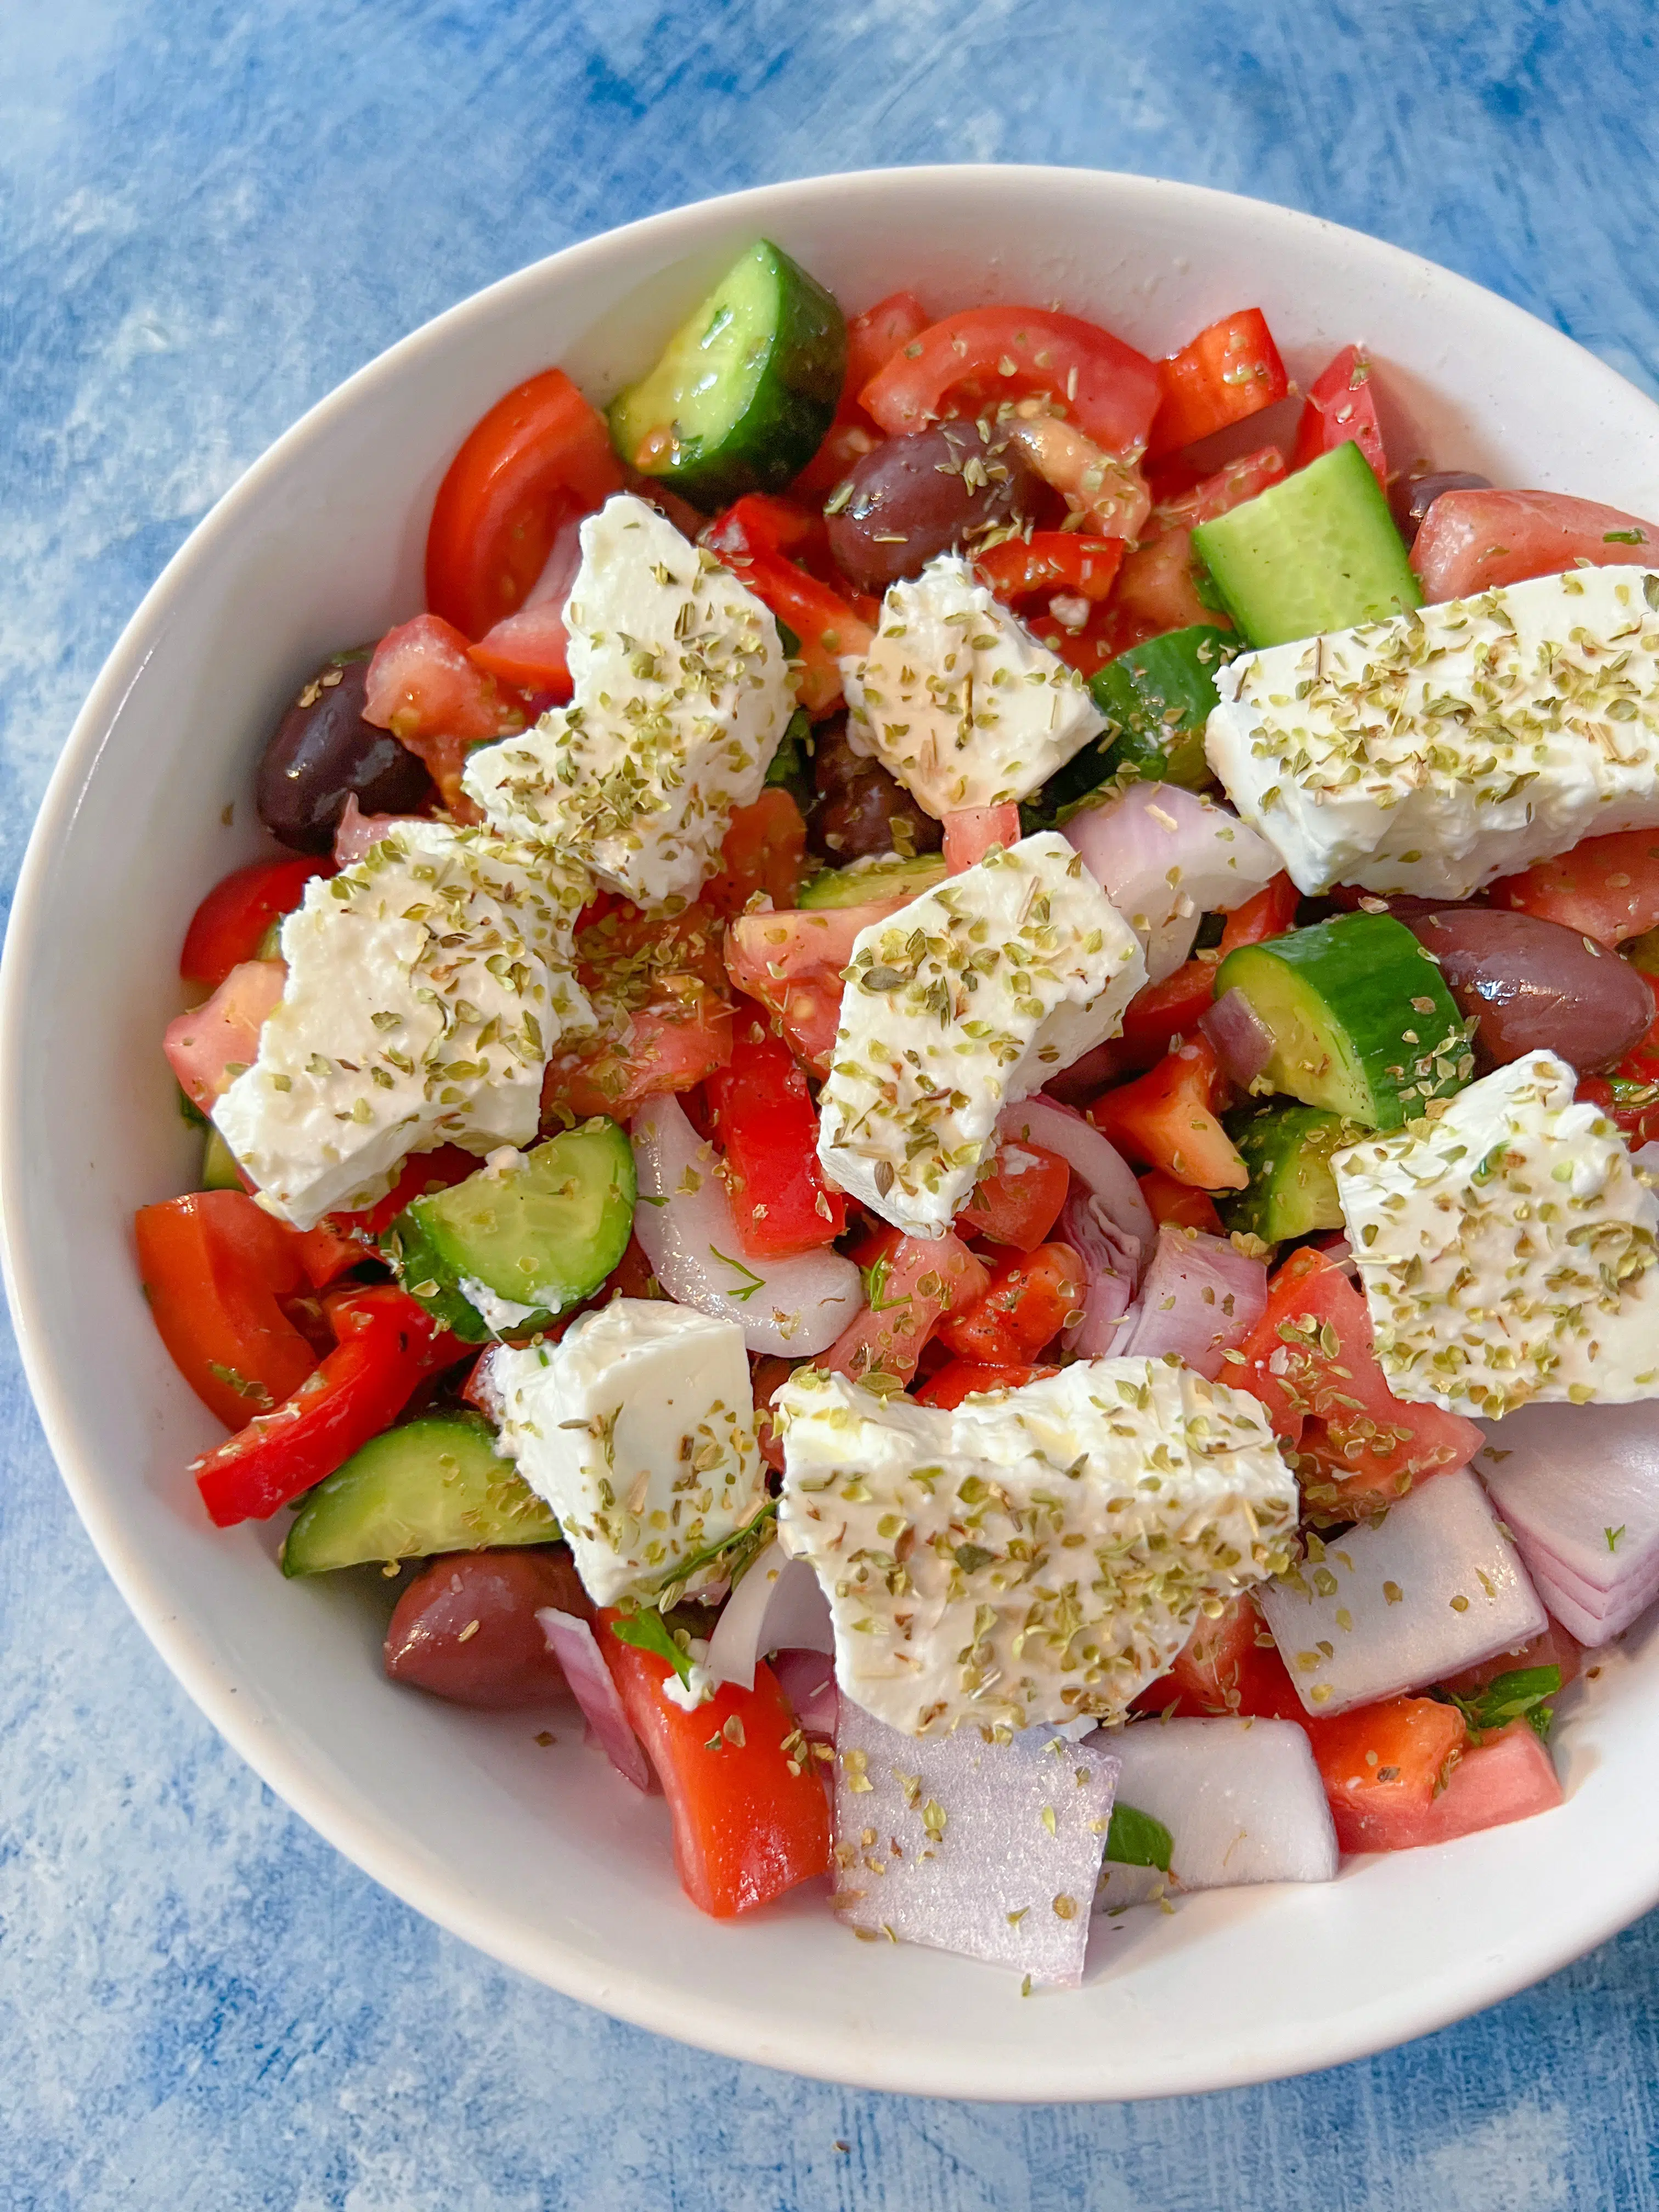 Horiatiki Greek salad